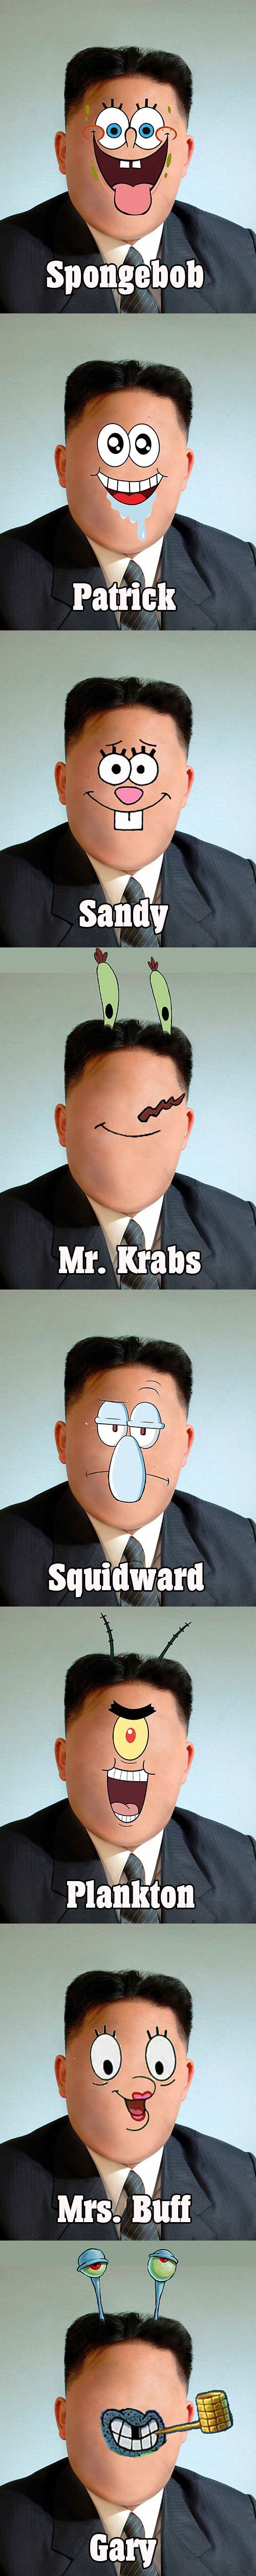 Kim Jong-Un imitates Spongebob.